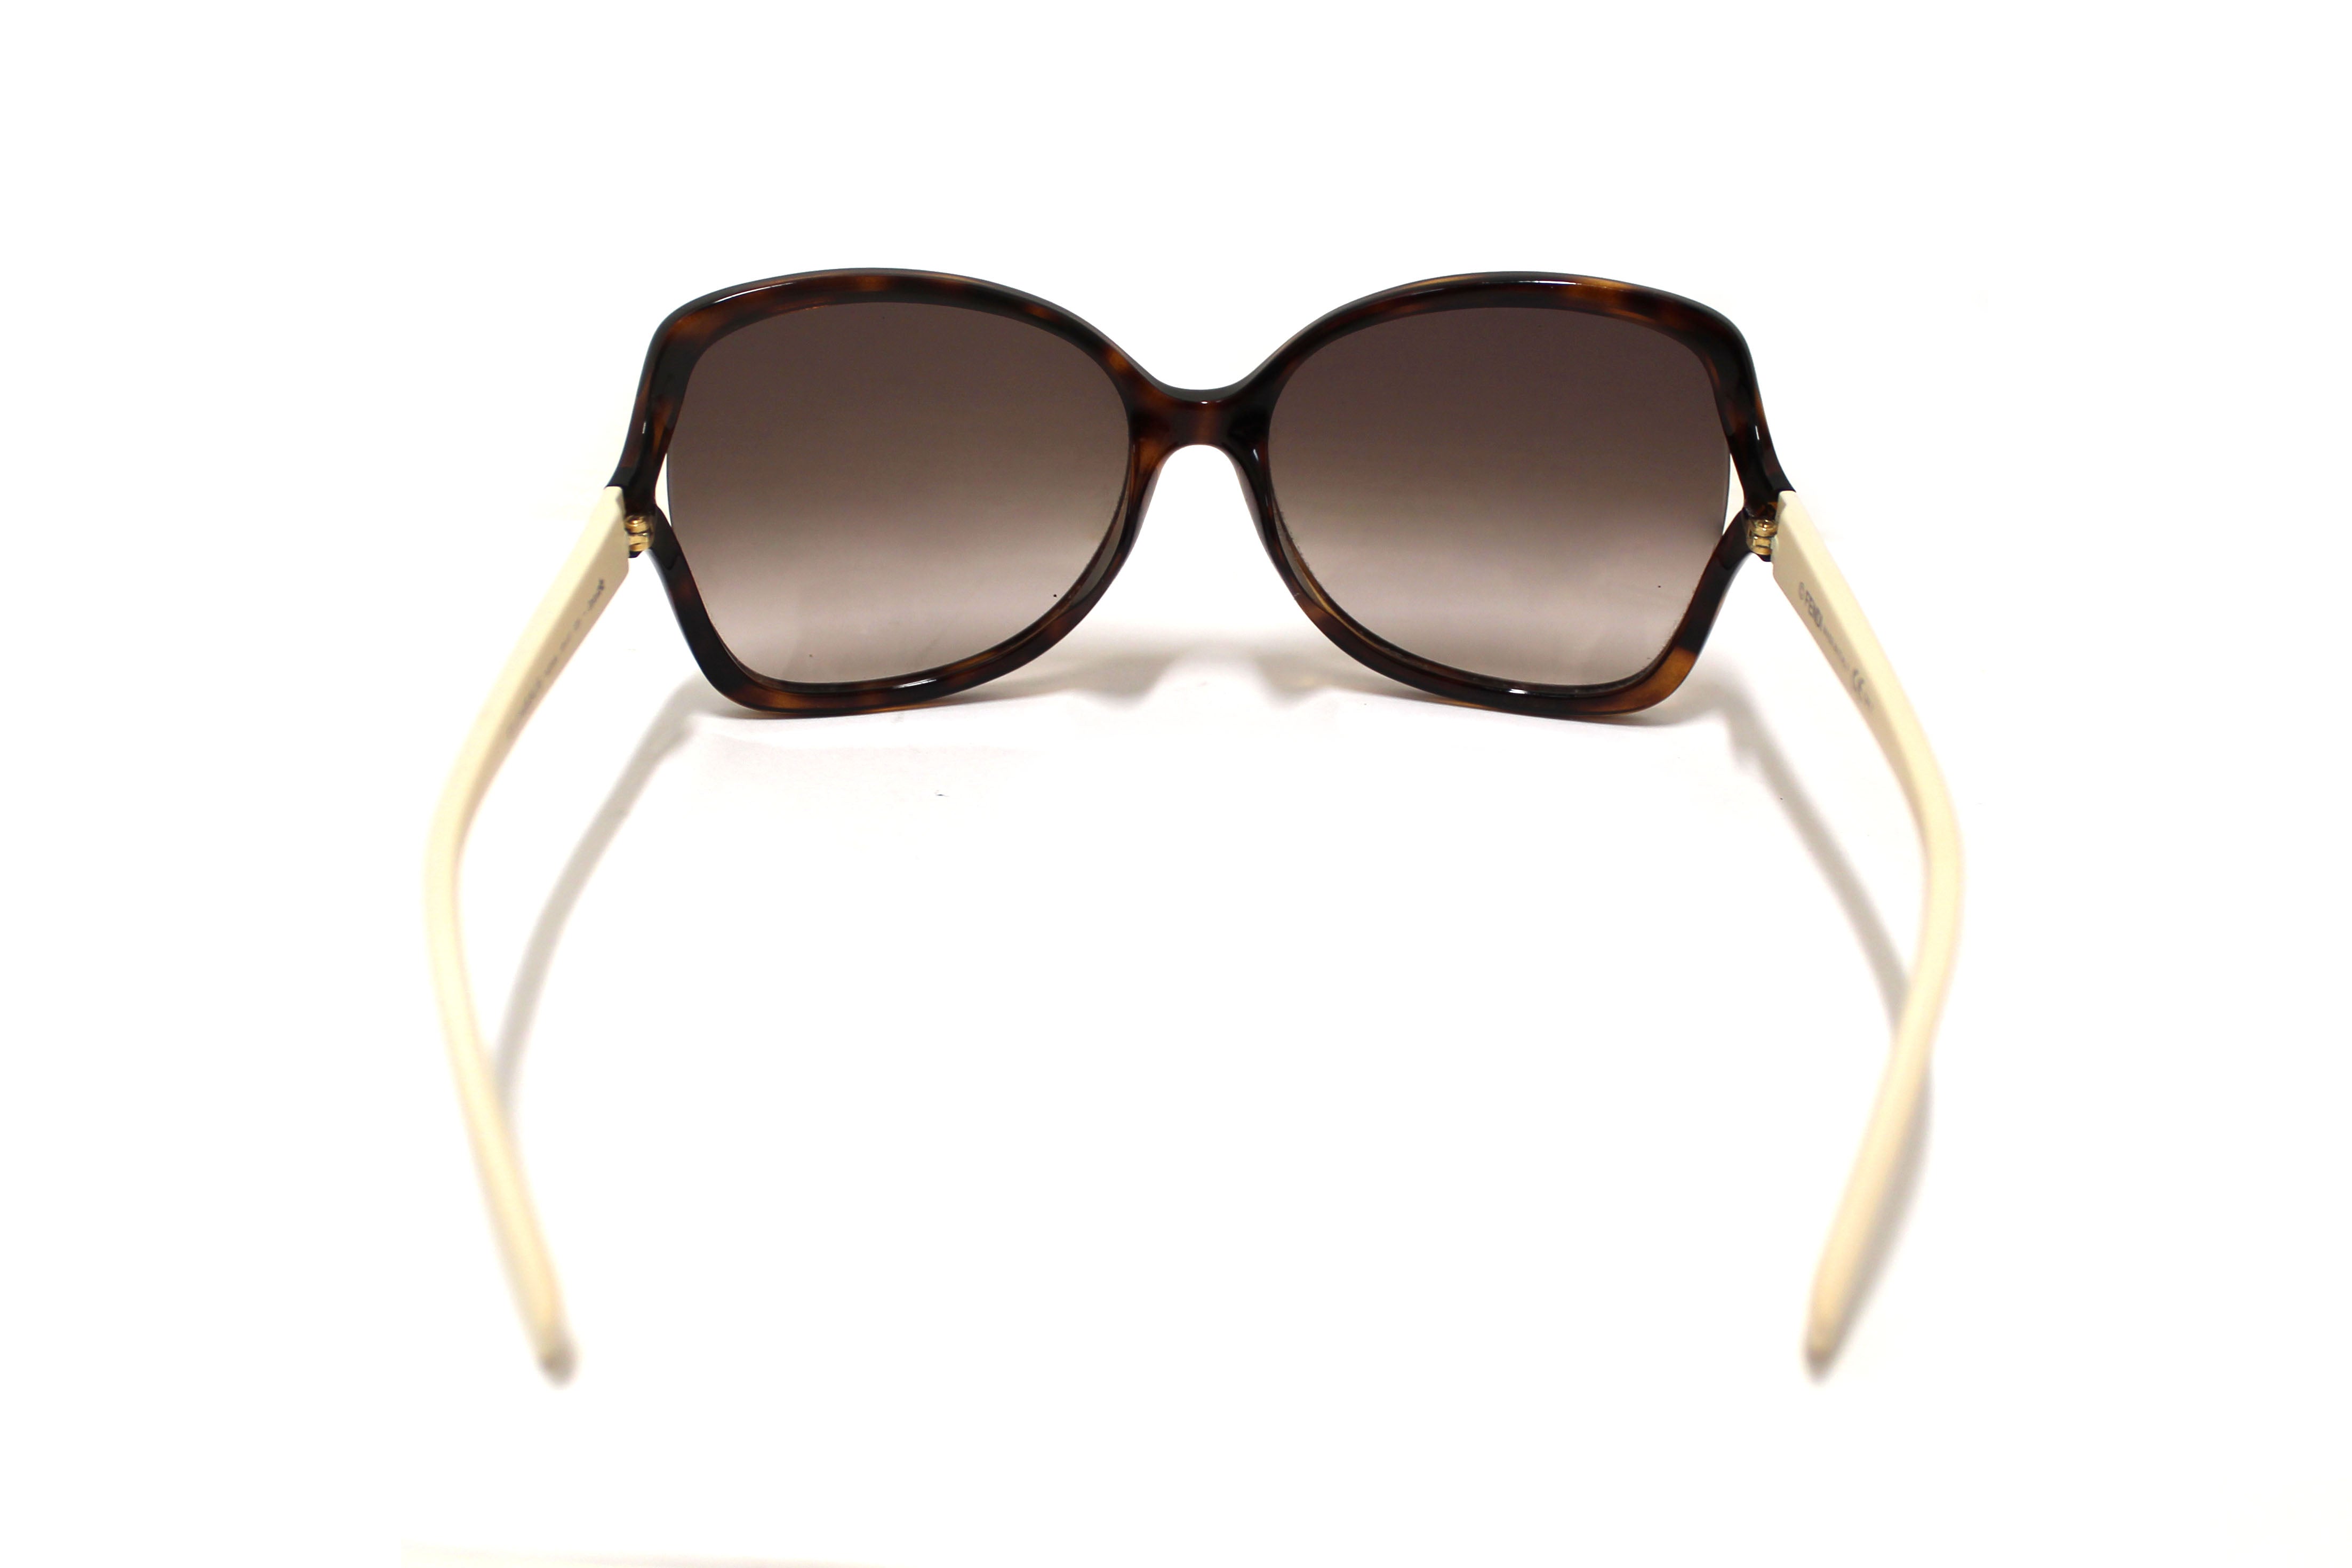 Authentic Fendi Tortoise Shell Acetate and White Frame Sunglasses